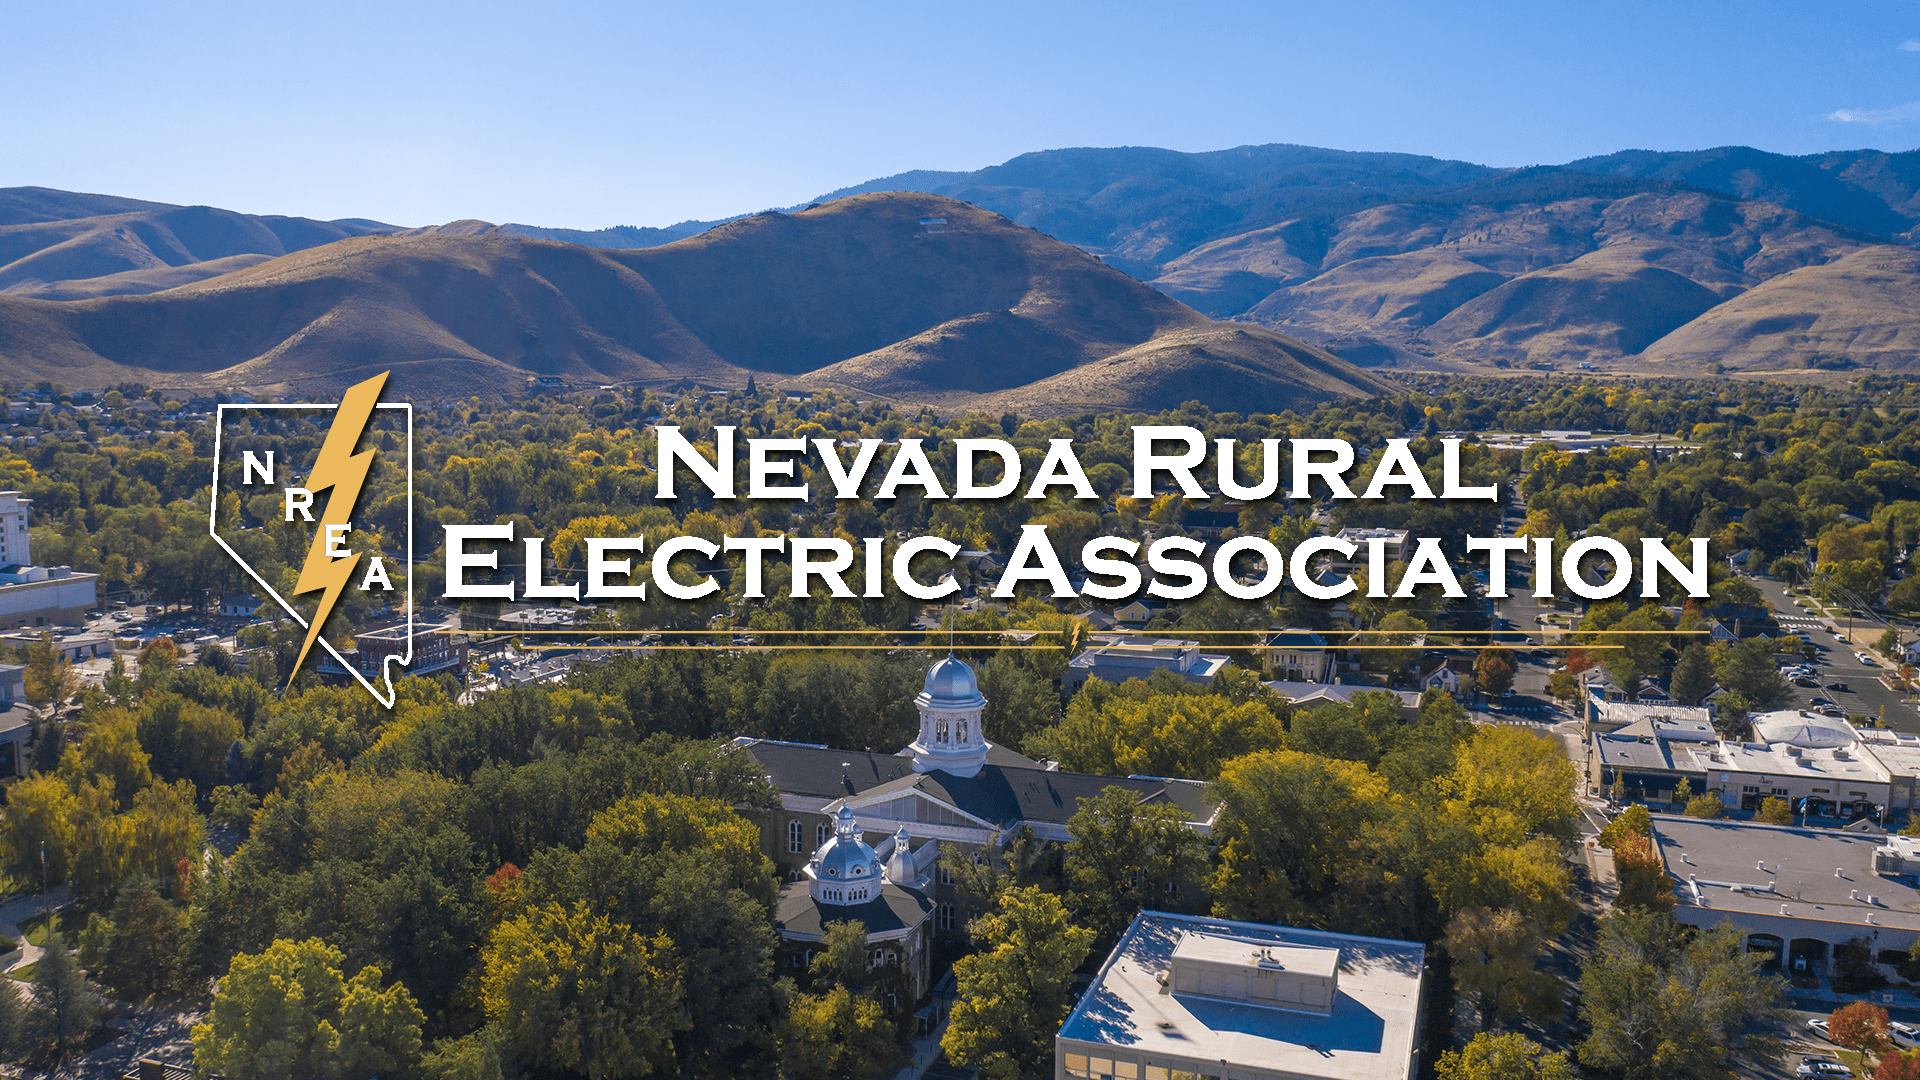 Nevada Rural Electric Association Annual Meeting, Carson City, NV